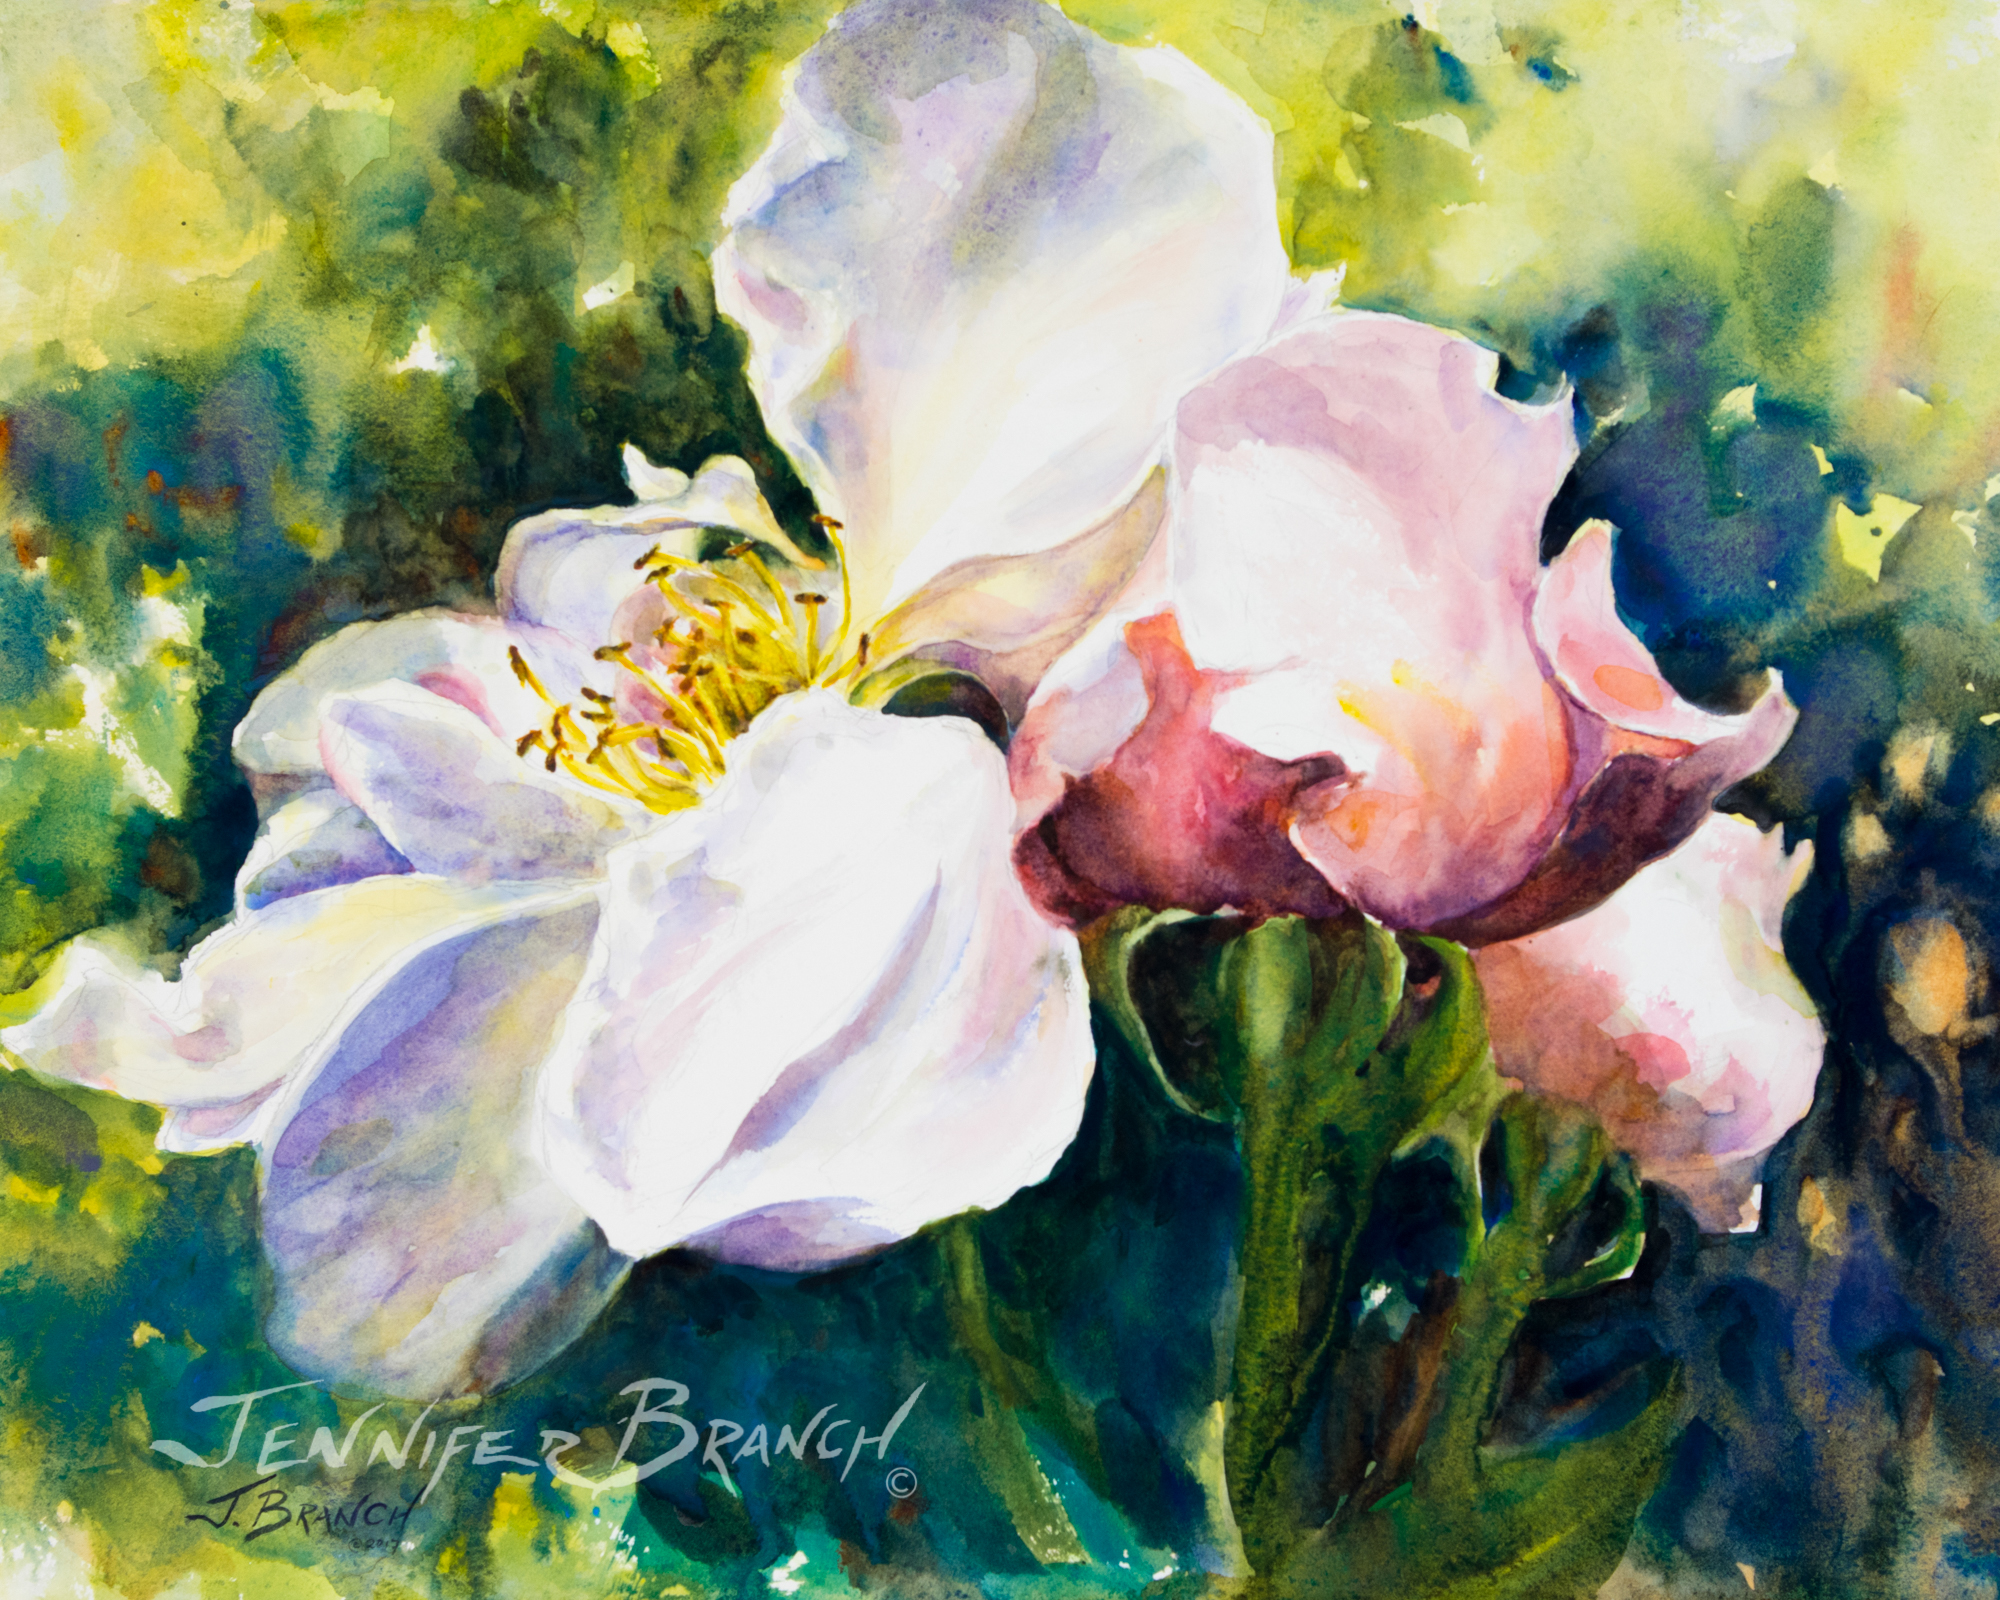 Roses watercolor painting by Jennifer Branch by Jennifer Branch.